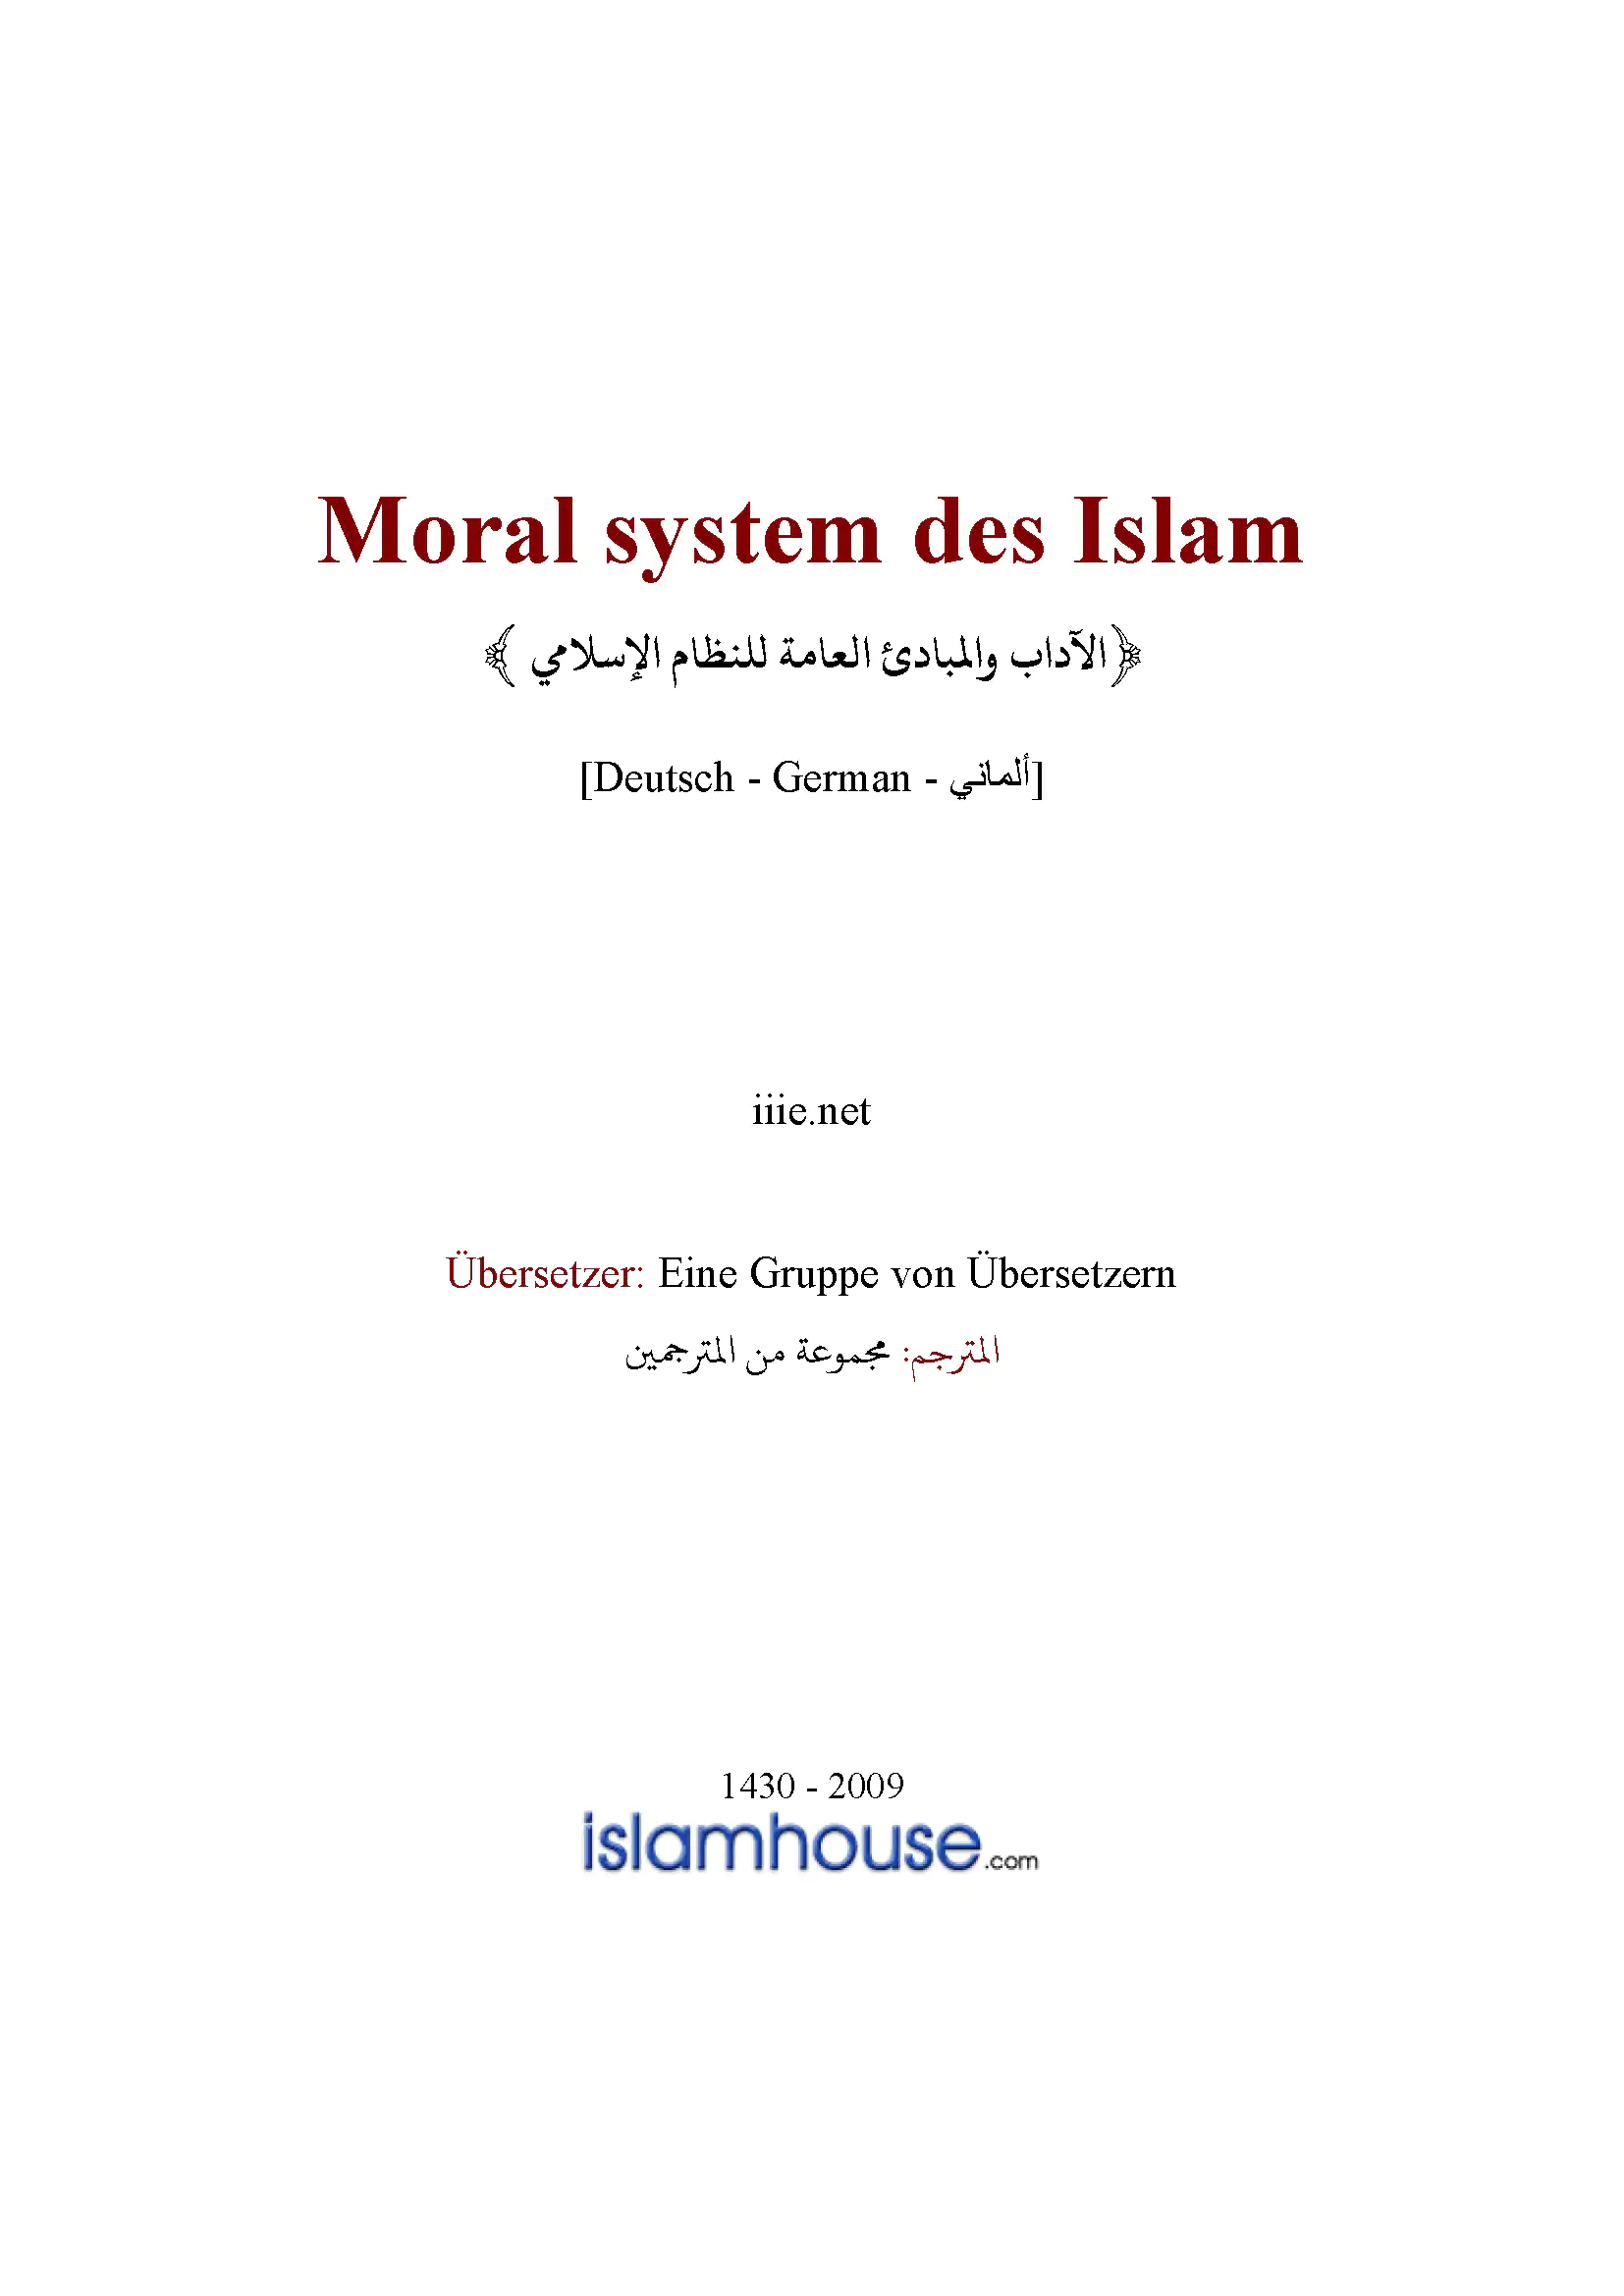 Moralsystem des Islam